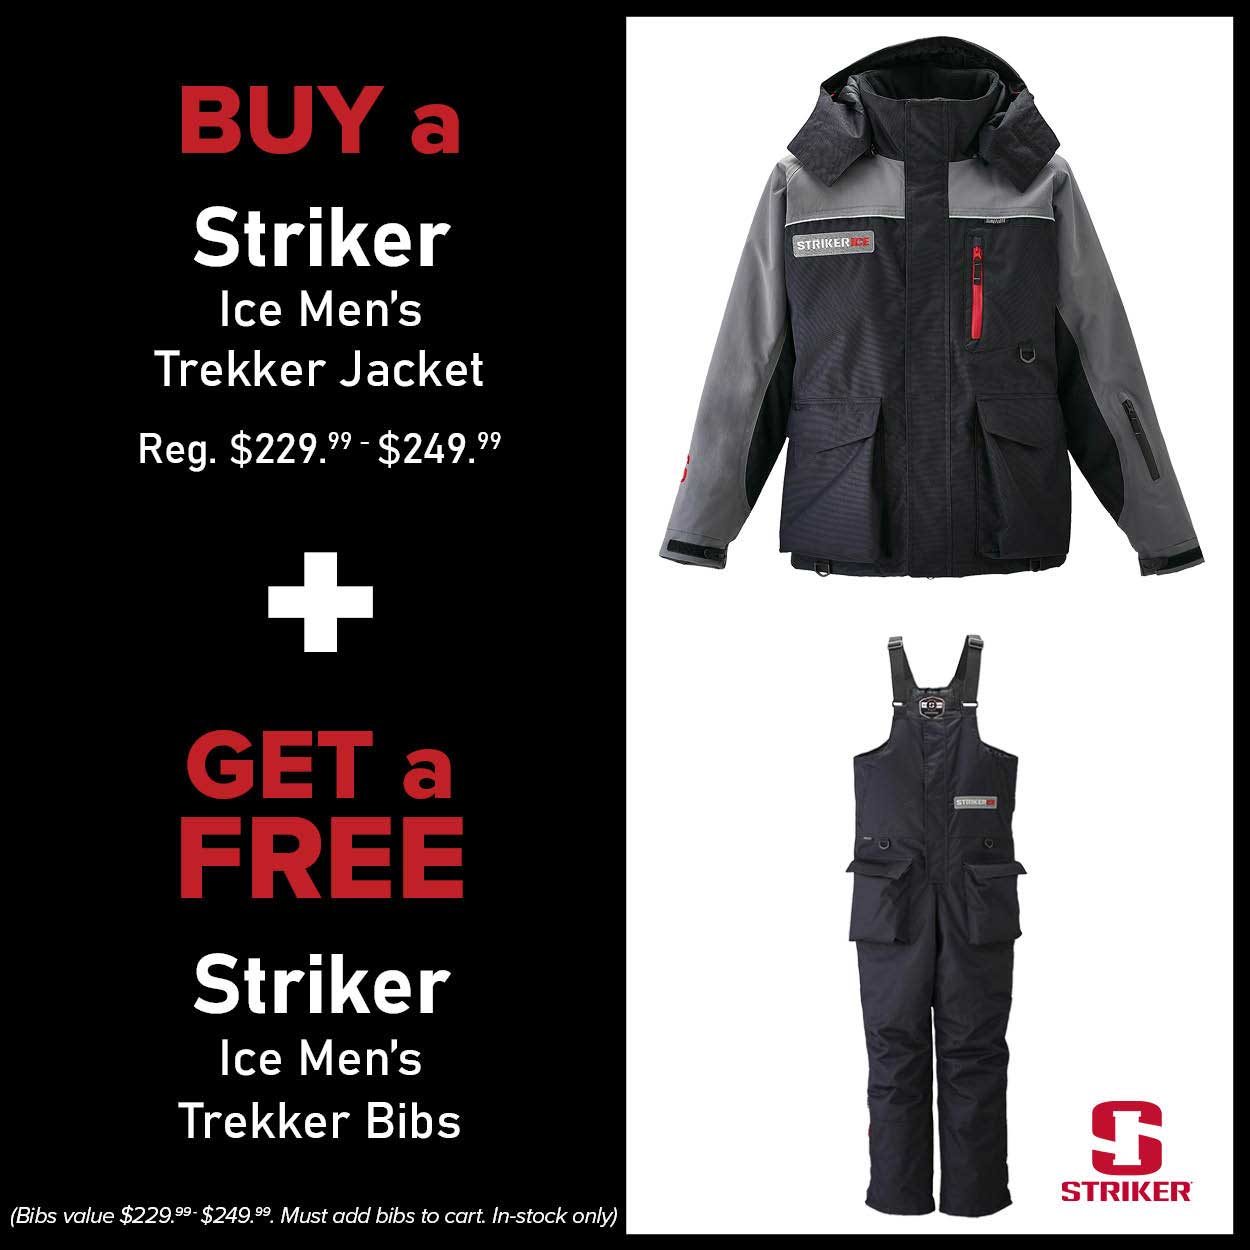 Get a Free Pair of Striker Ice Men's Trekker Bibs when you purchase a Striker Ice Men's Trekker Jacket Reg. $229.99 - $249.99 (Bibs value $229.99 - $249.99. Must add bibs to cart. In-stock only.)